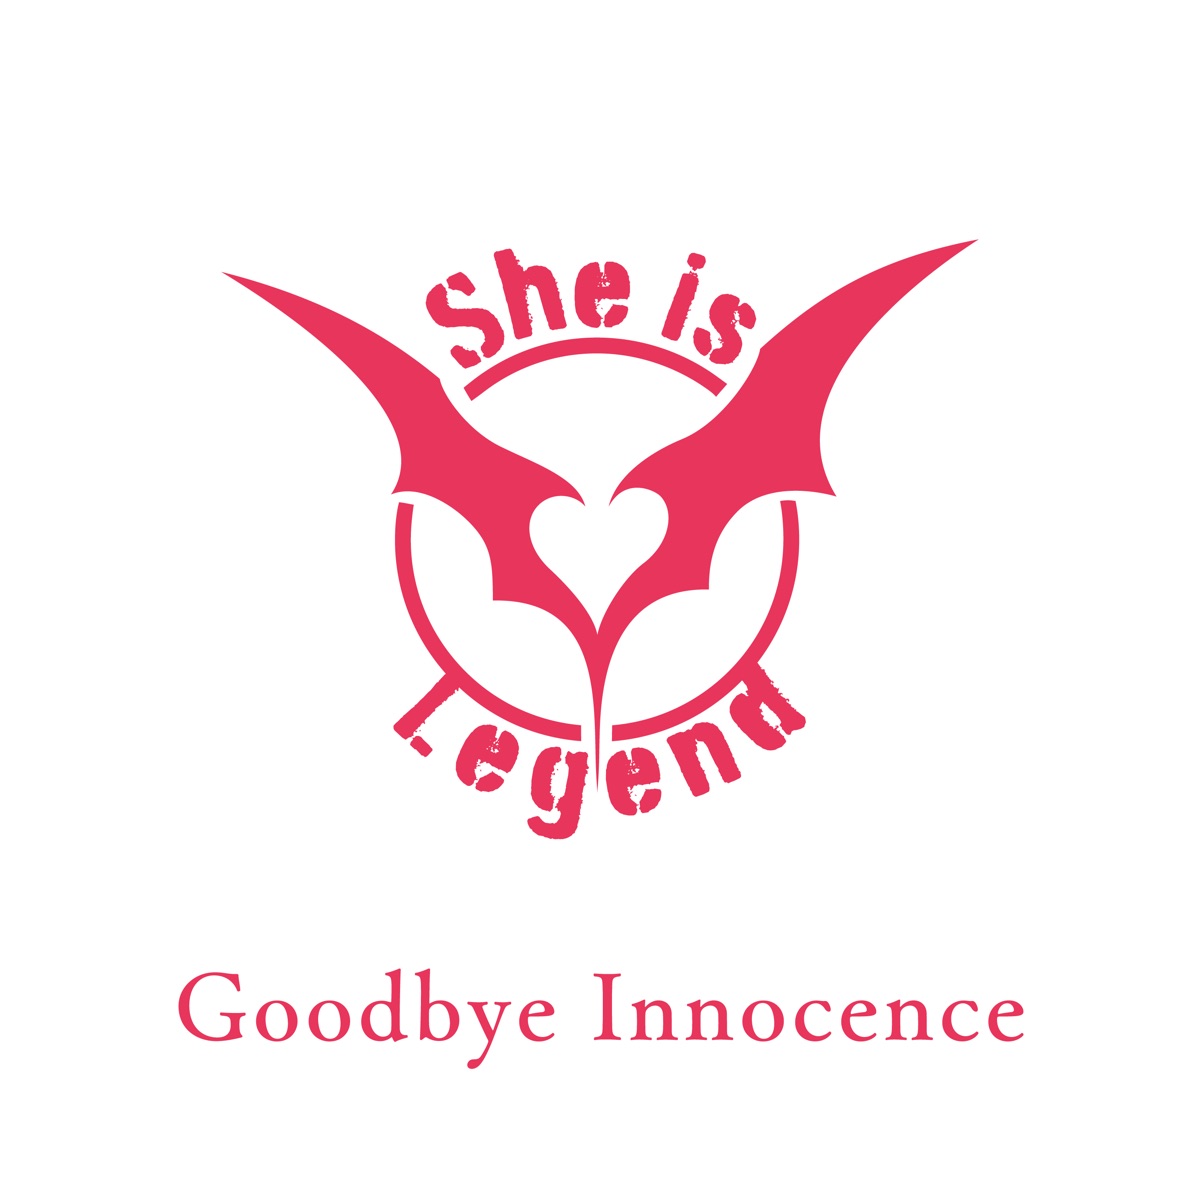 Cover art for『She is Legend - Goodbye Innocence』from the release『Goodbye Innocence